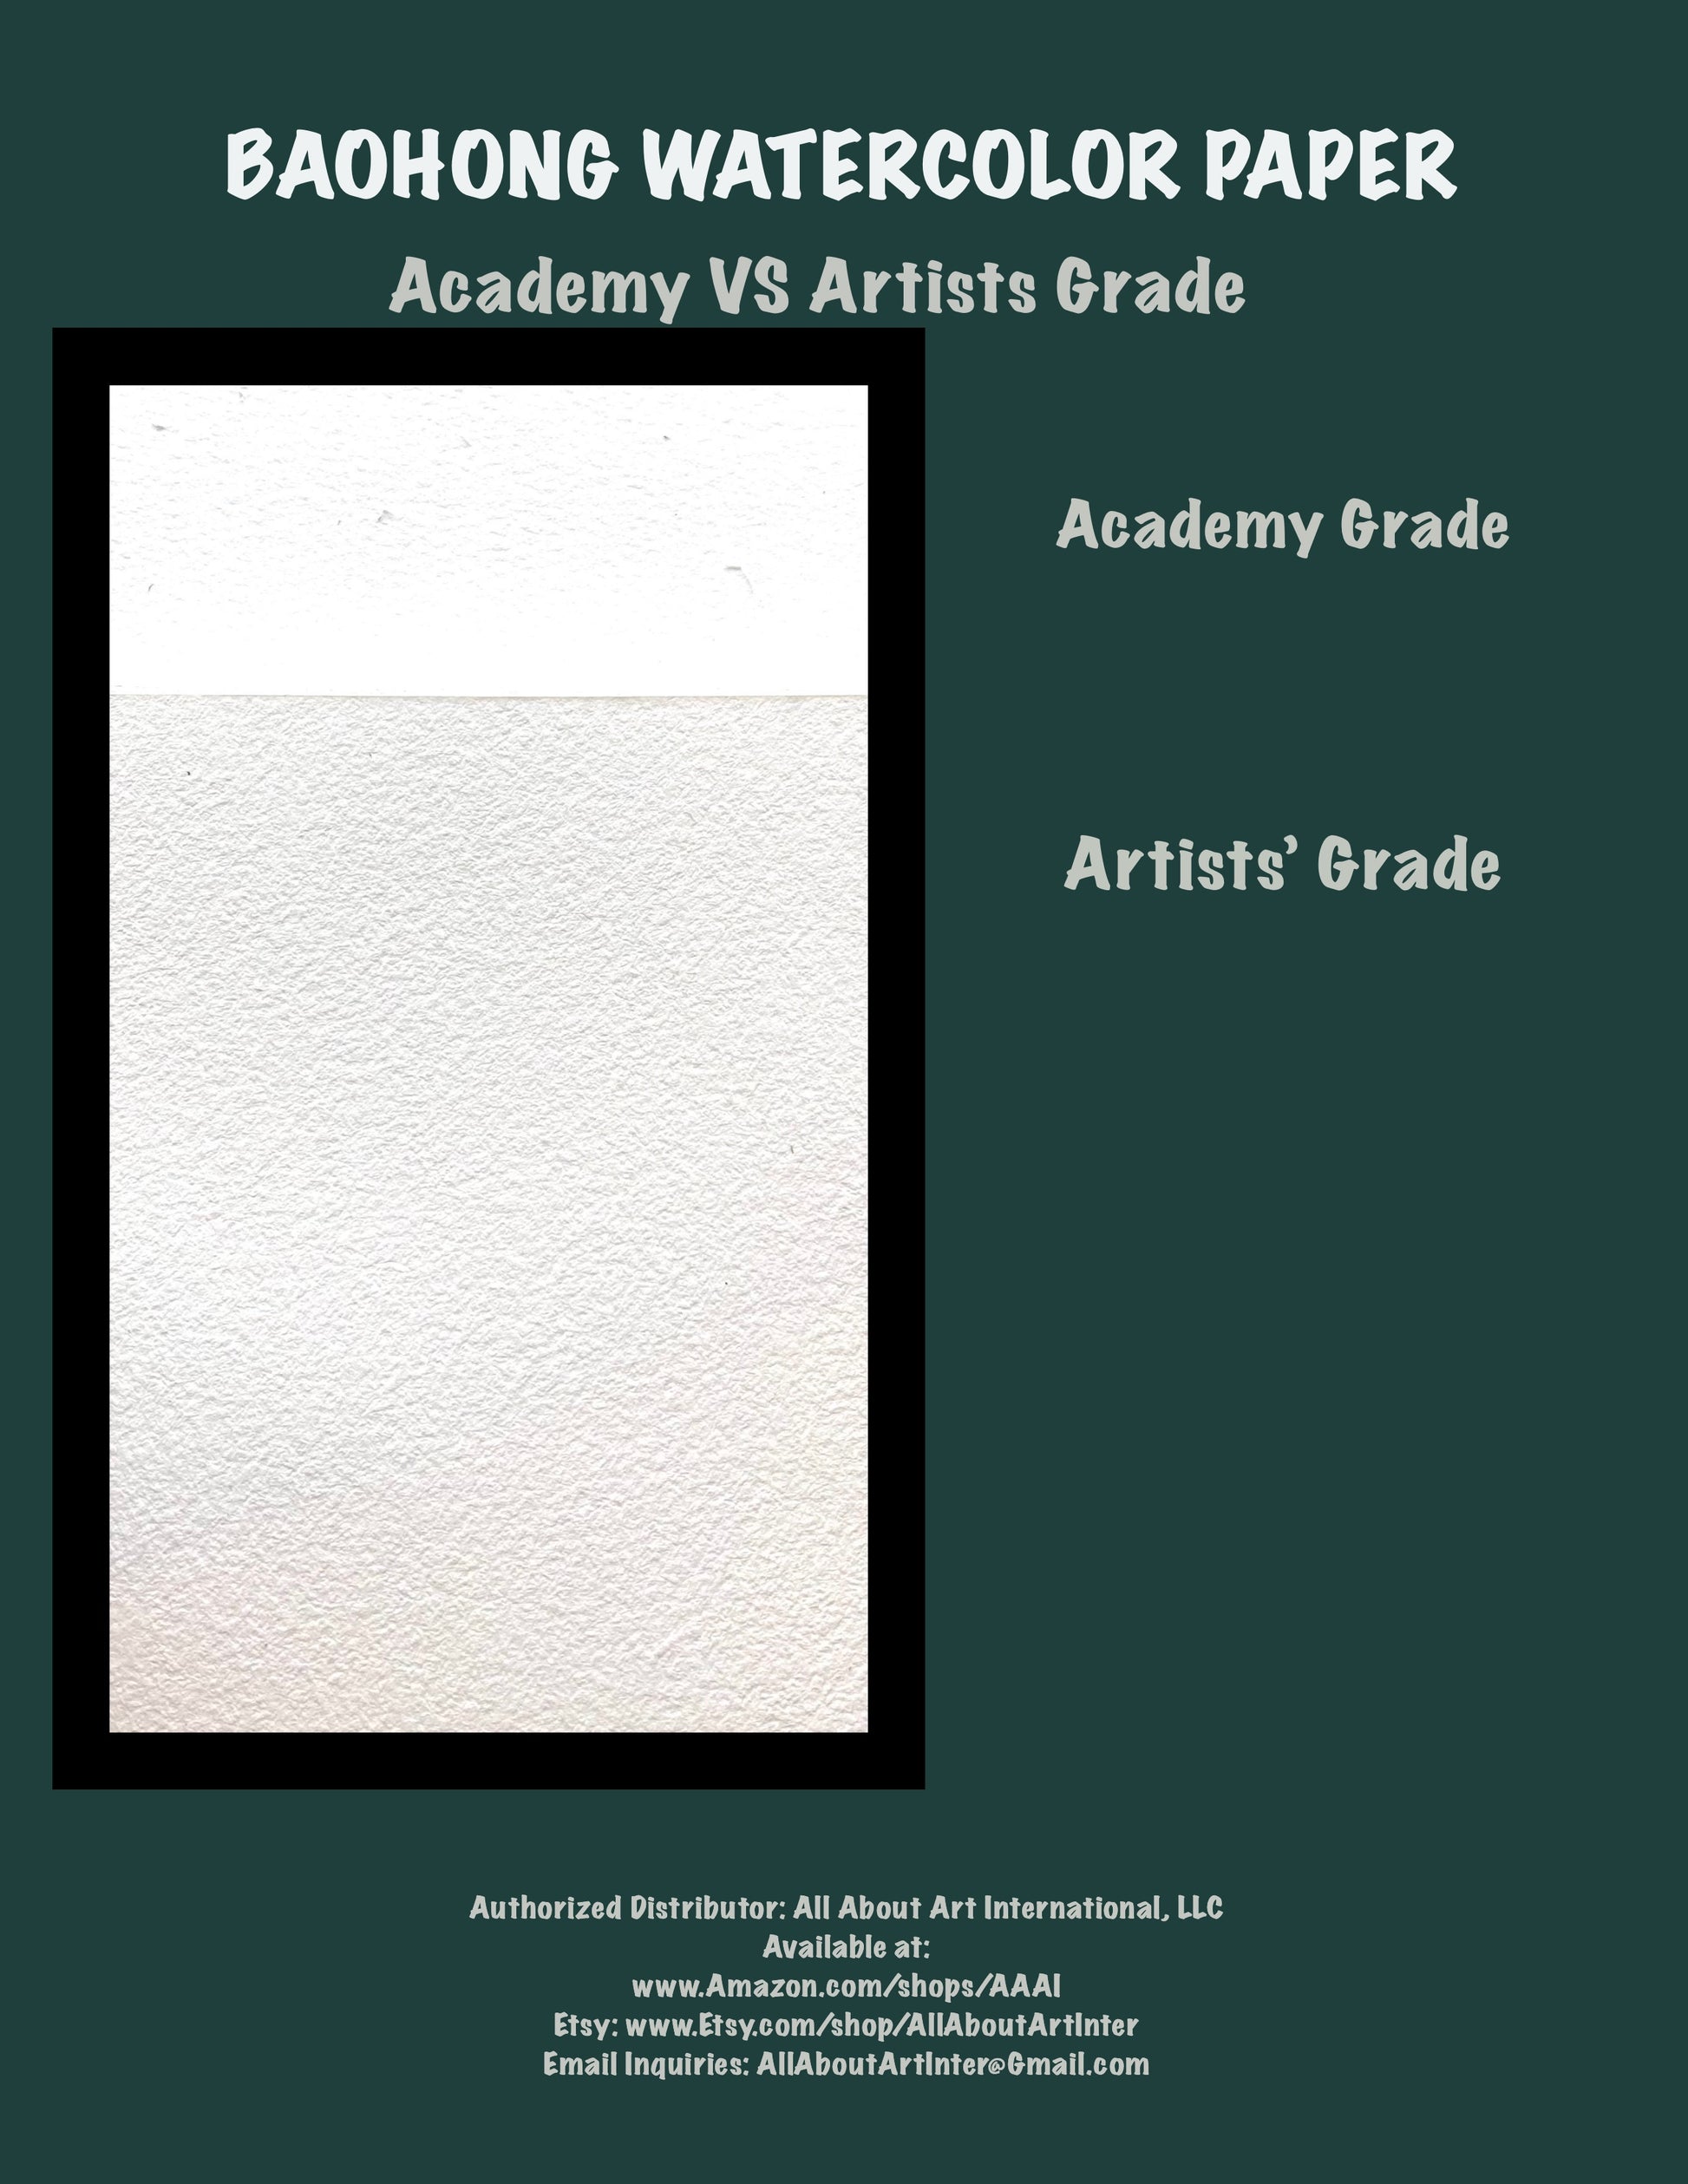 BAOHONG Academy Grade Watercolor Block